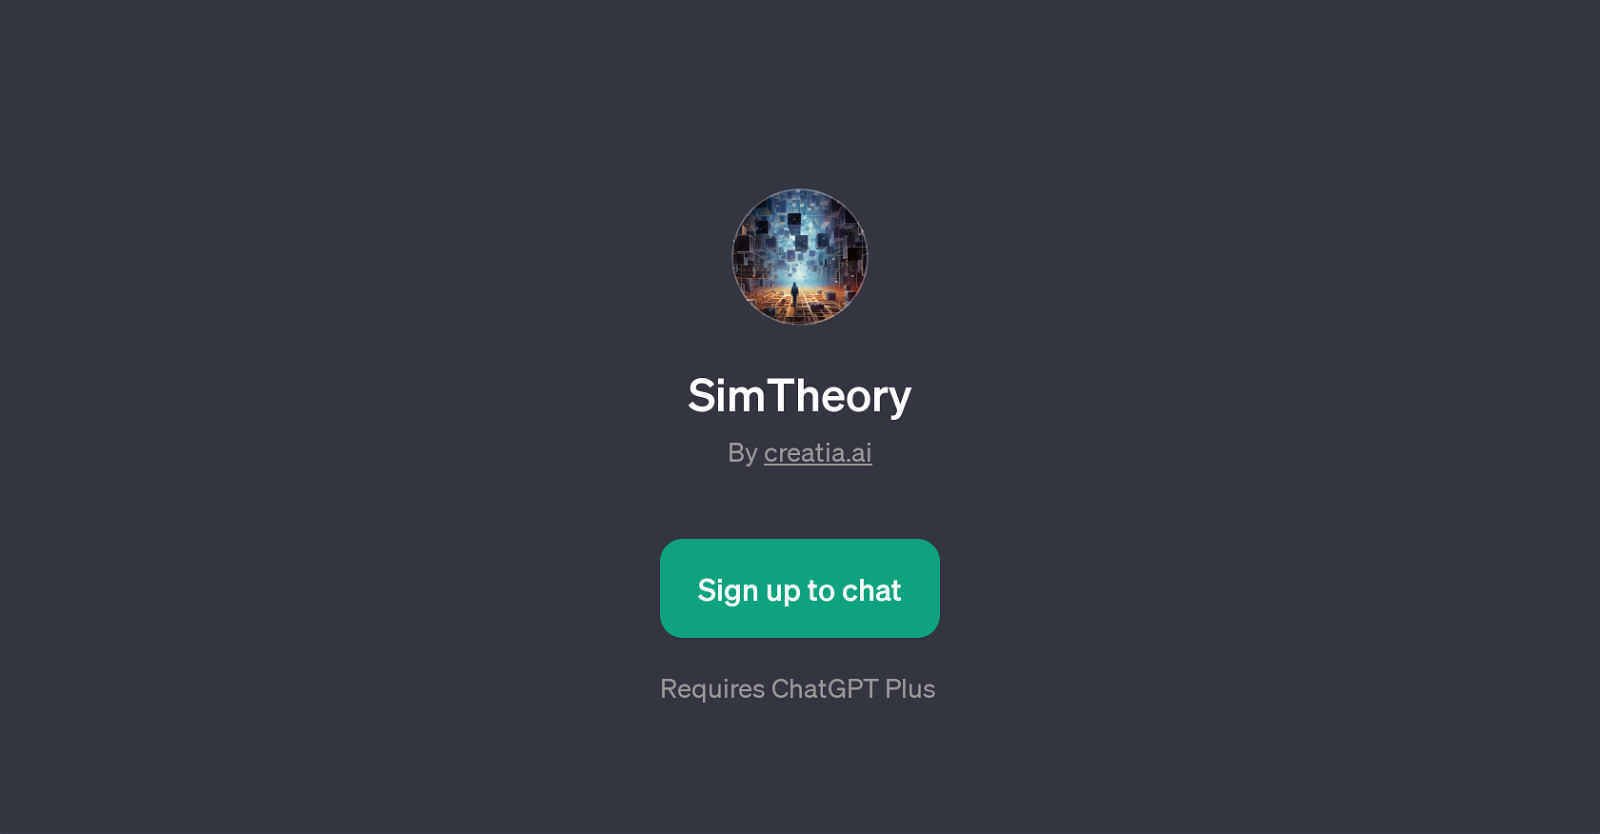 SimTheory website